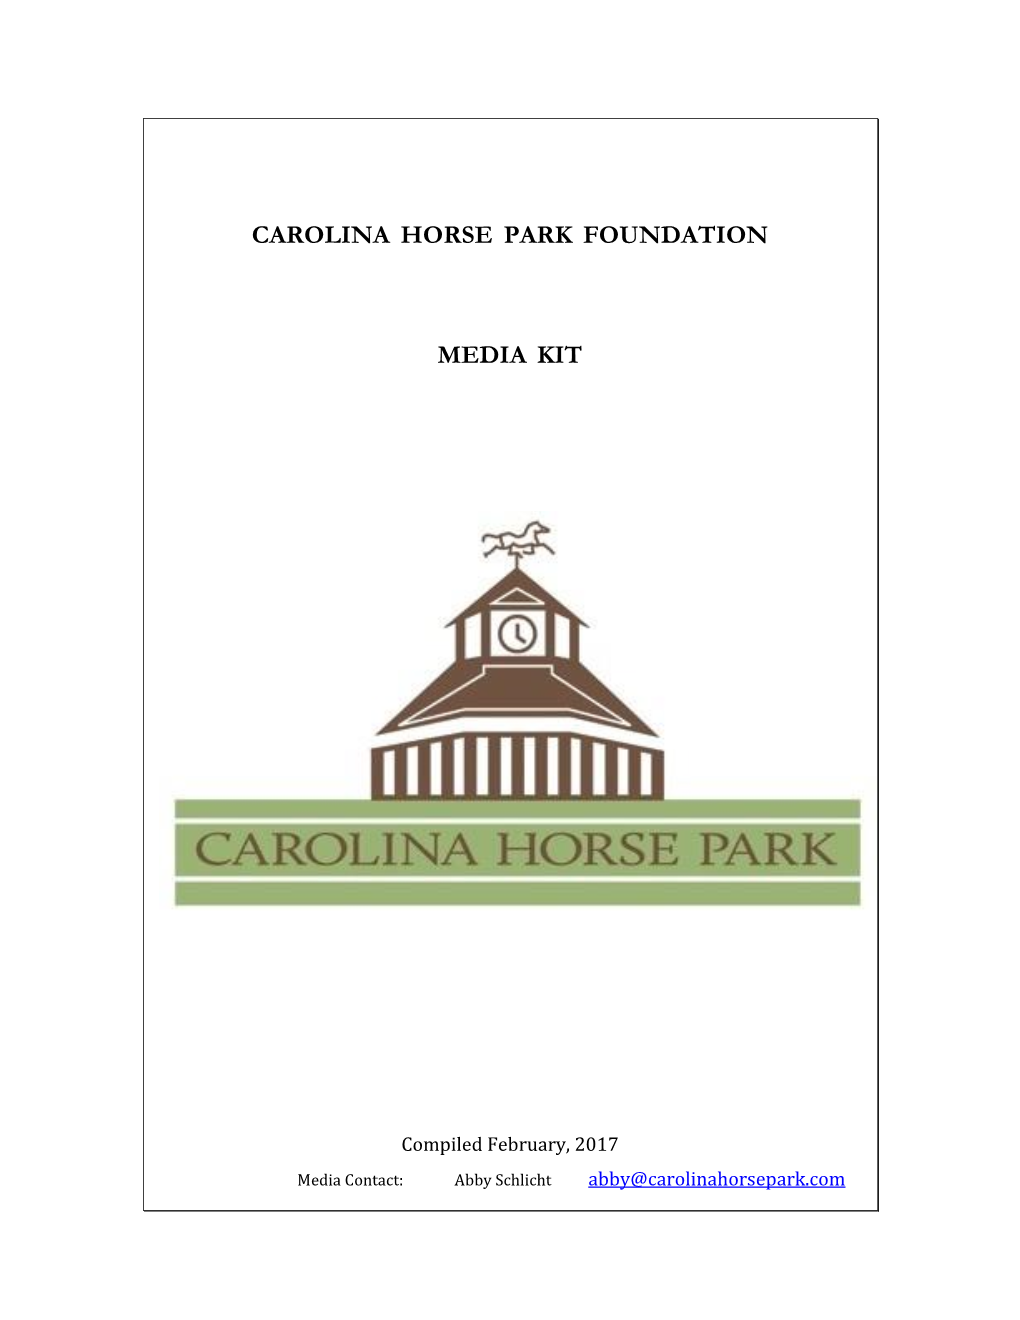 Carolina Horse Park Foundation